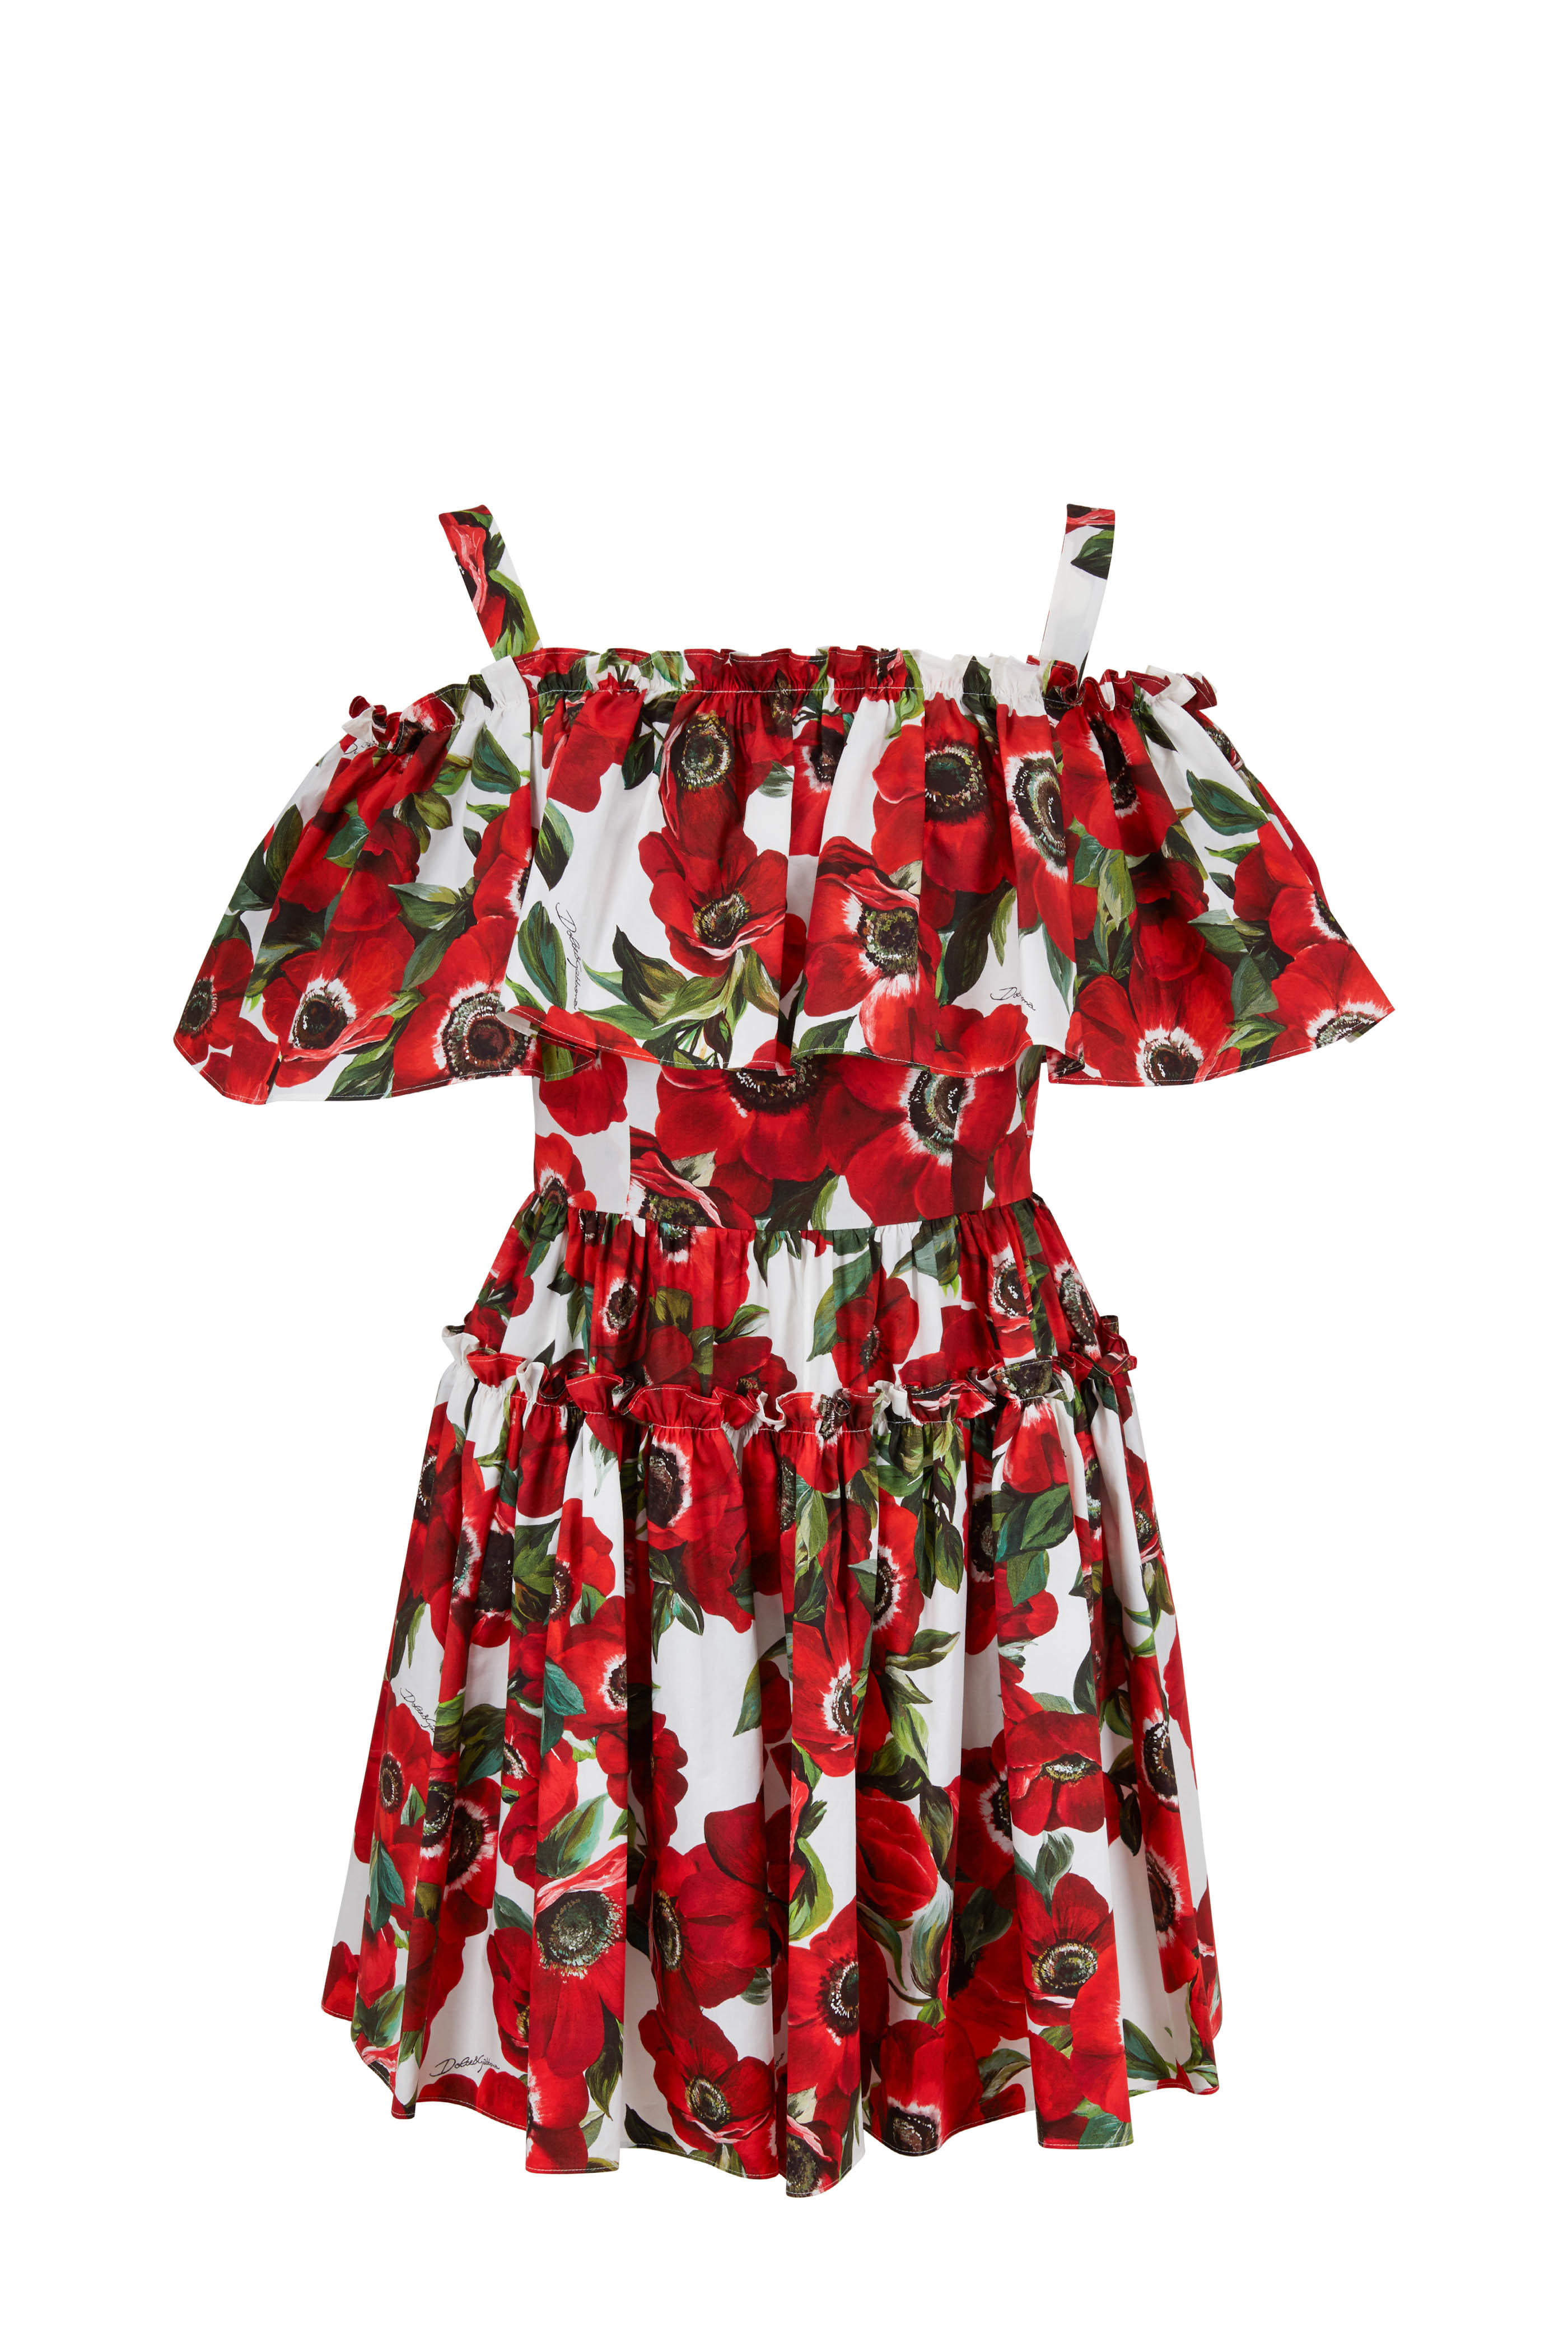 dolce gabbana red floral dress